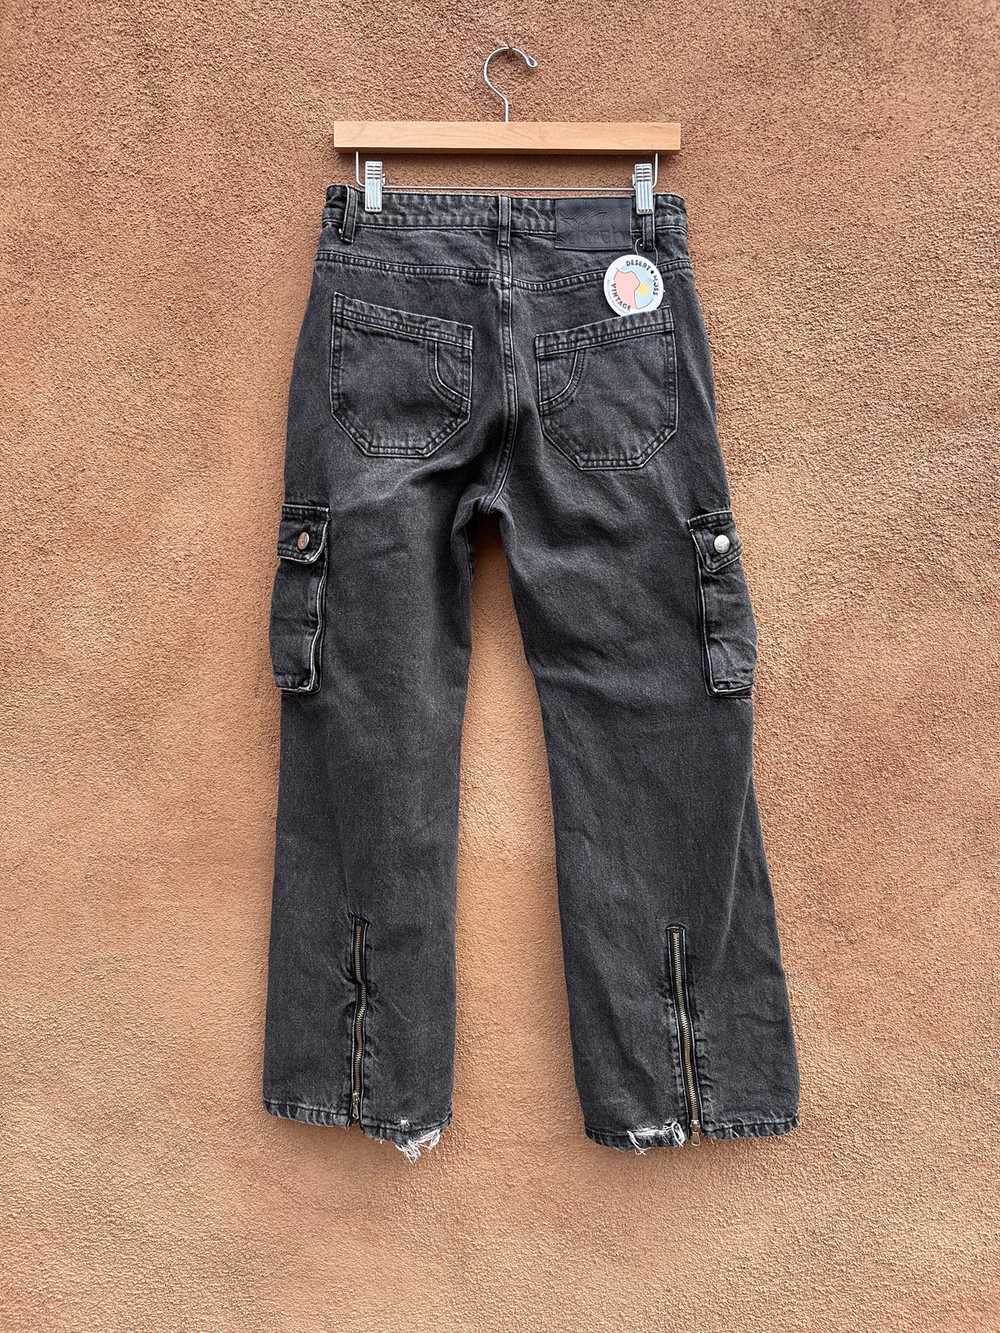 Black Cargo 90's Denim Jeans by Ditch 28 x 28 - image 2